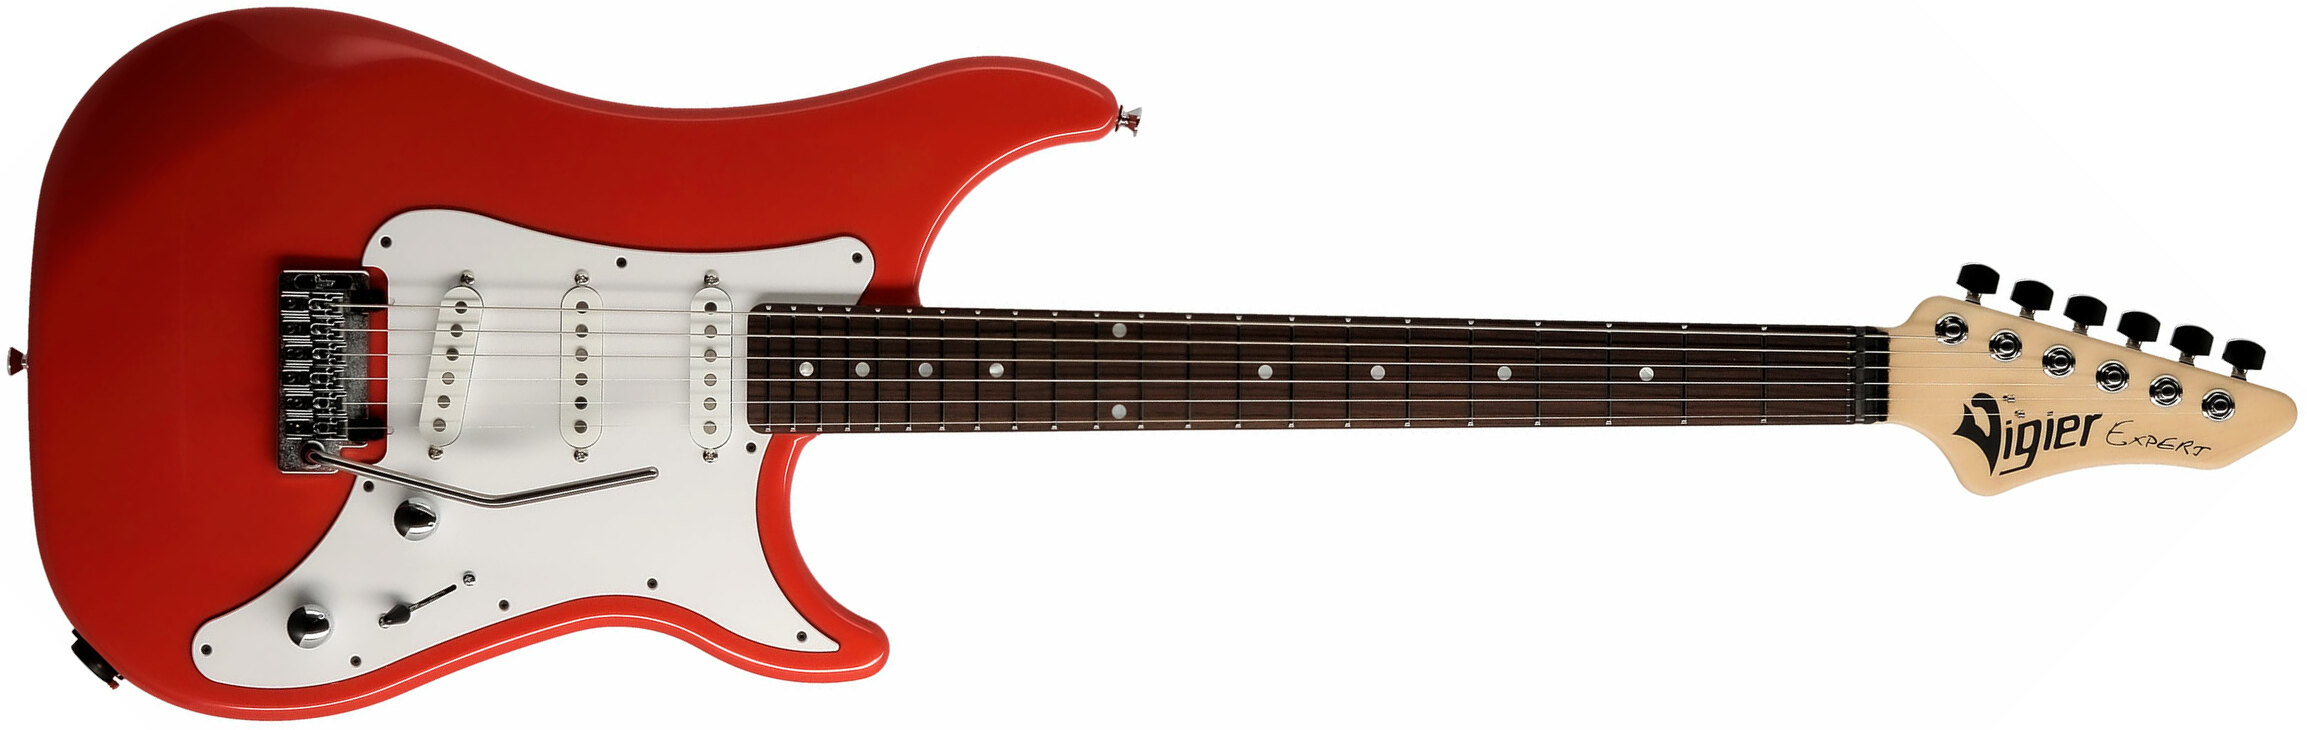 Vigier Expert Classic Rock Sss Trem Rw - Normandie Red - Str shape electric guitar - Main picture